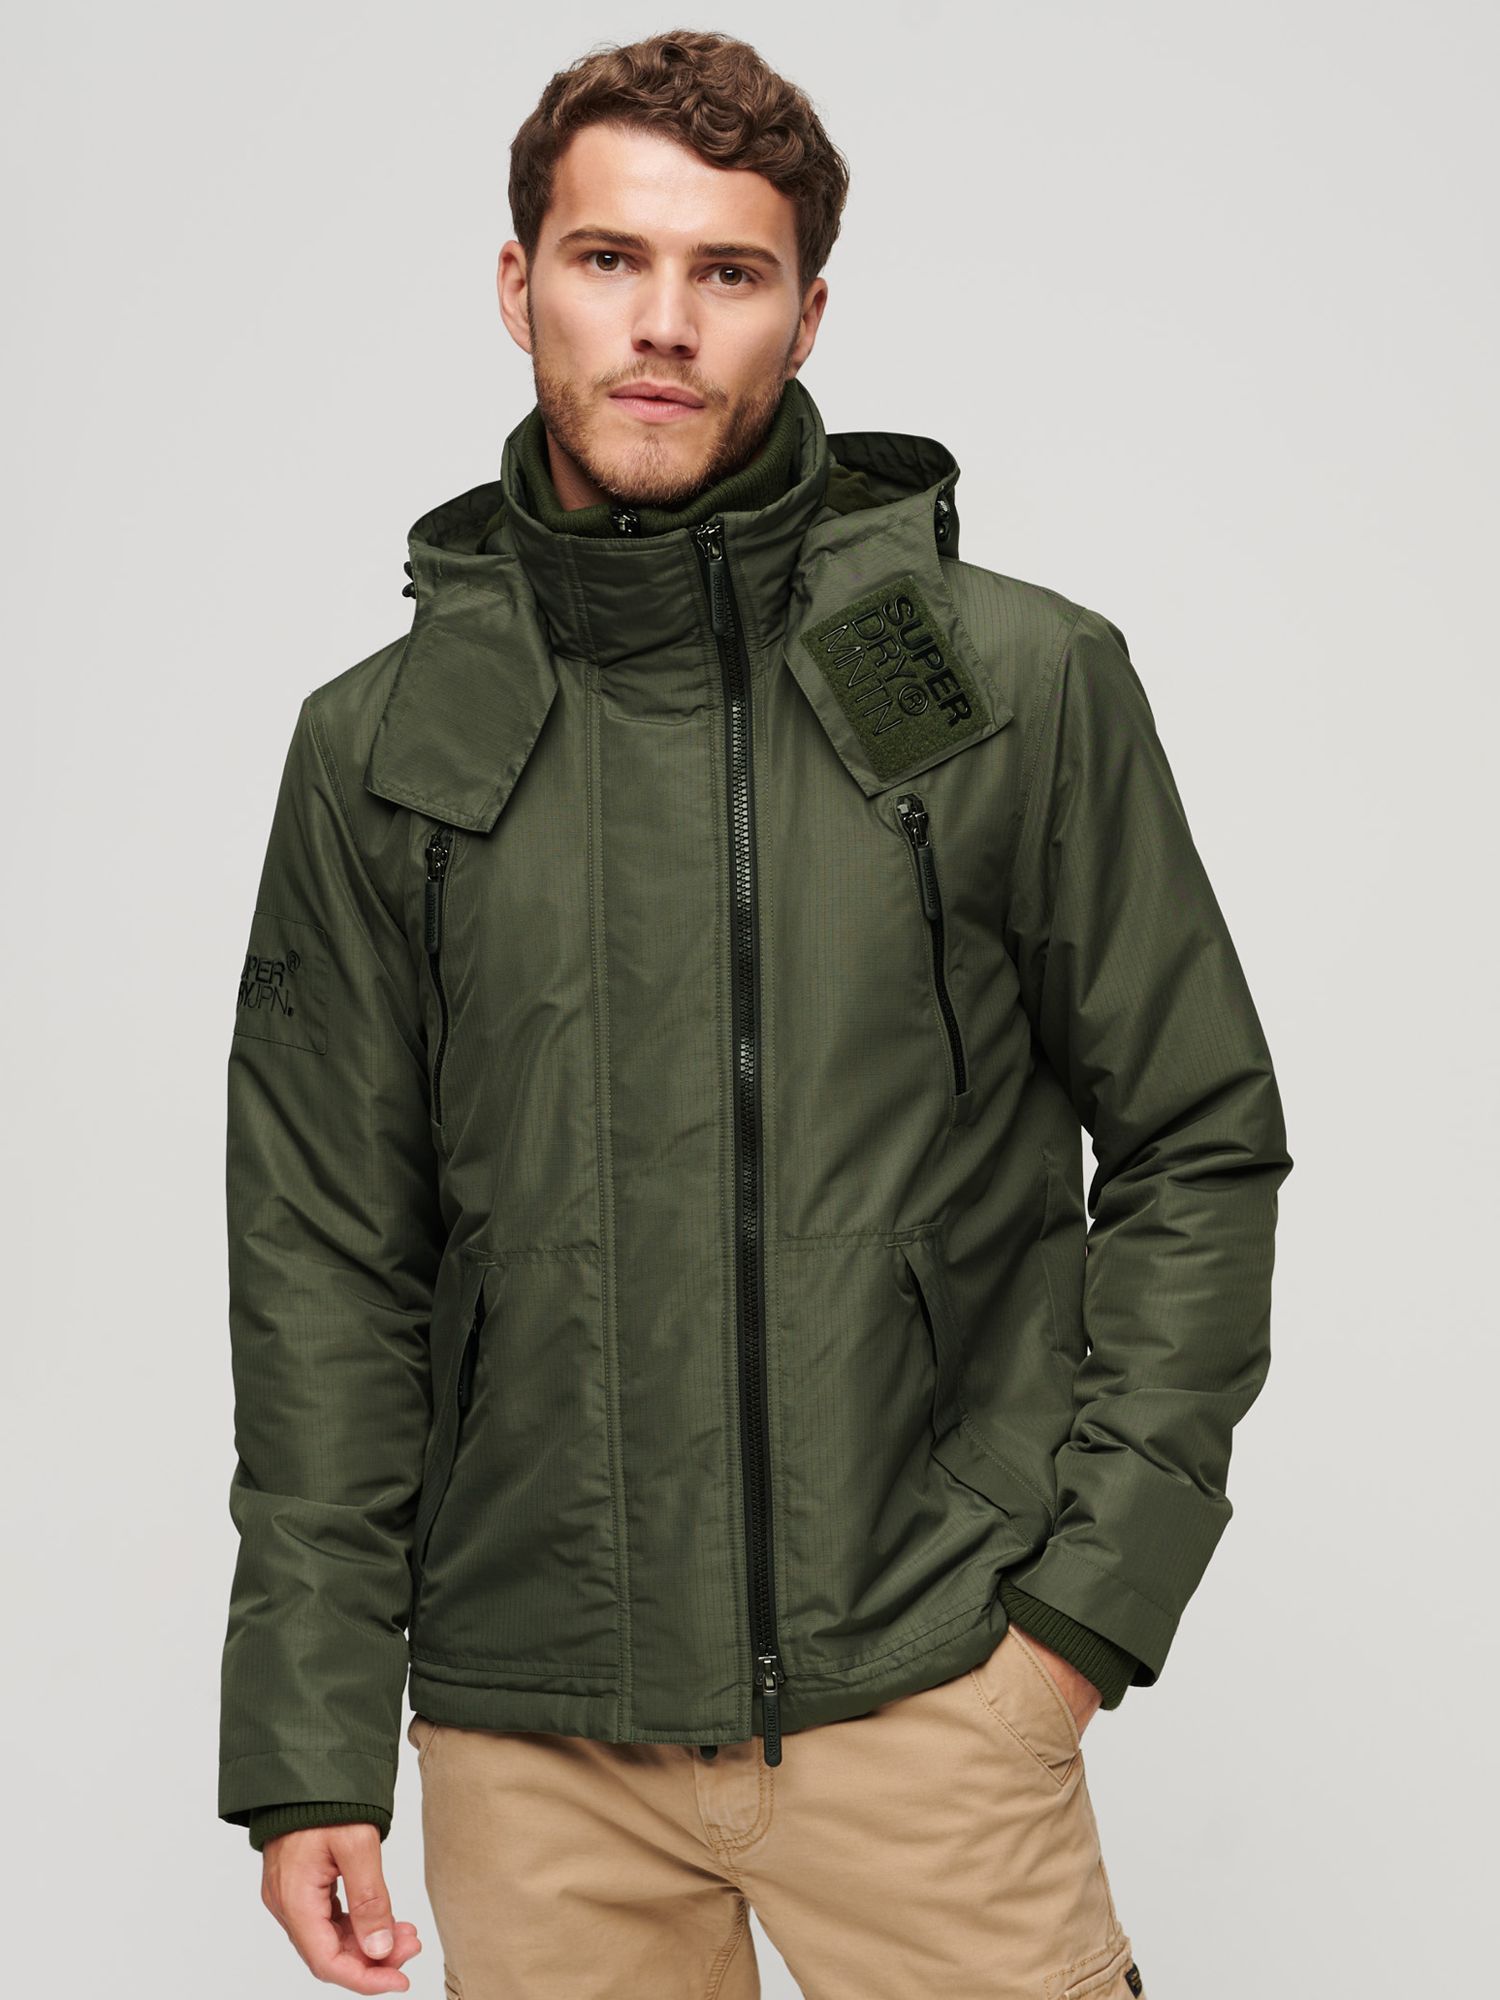 Куртка-ветровка Mountain SD Superdry, излишки оливкового товара ветровка superdry размер 14 зеленый